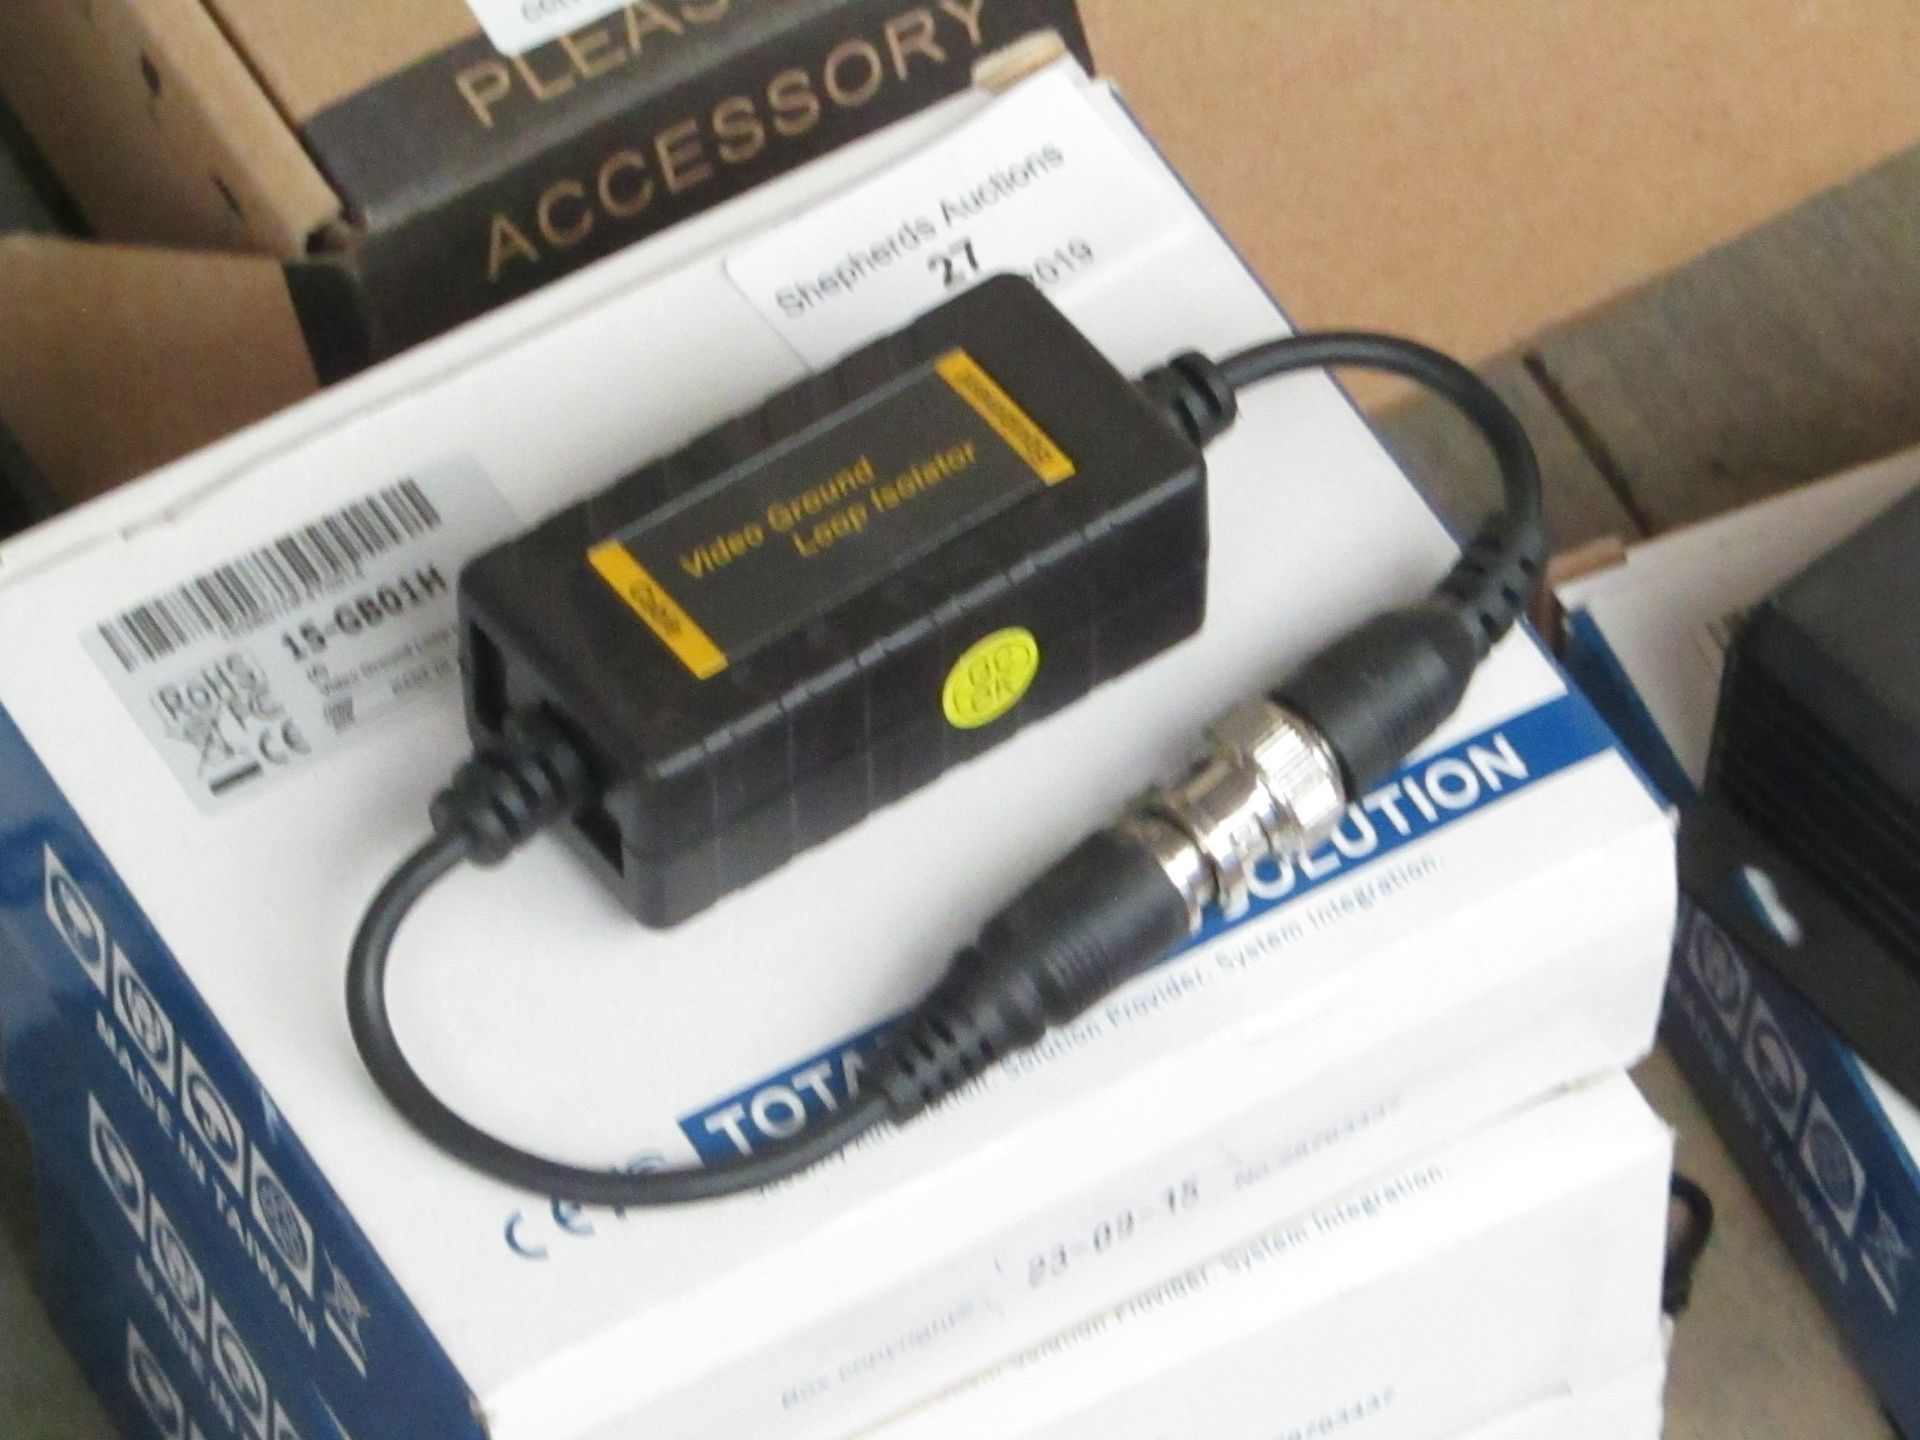 3x Cop Security video ground loop isolator, 15-GB01H.